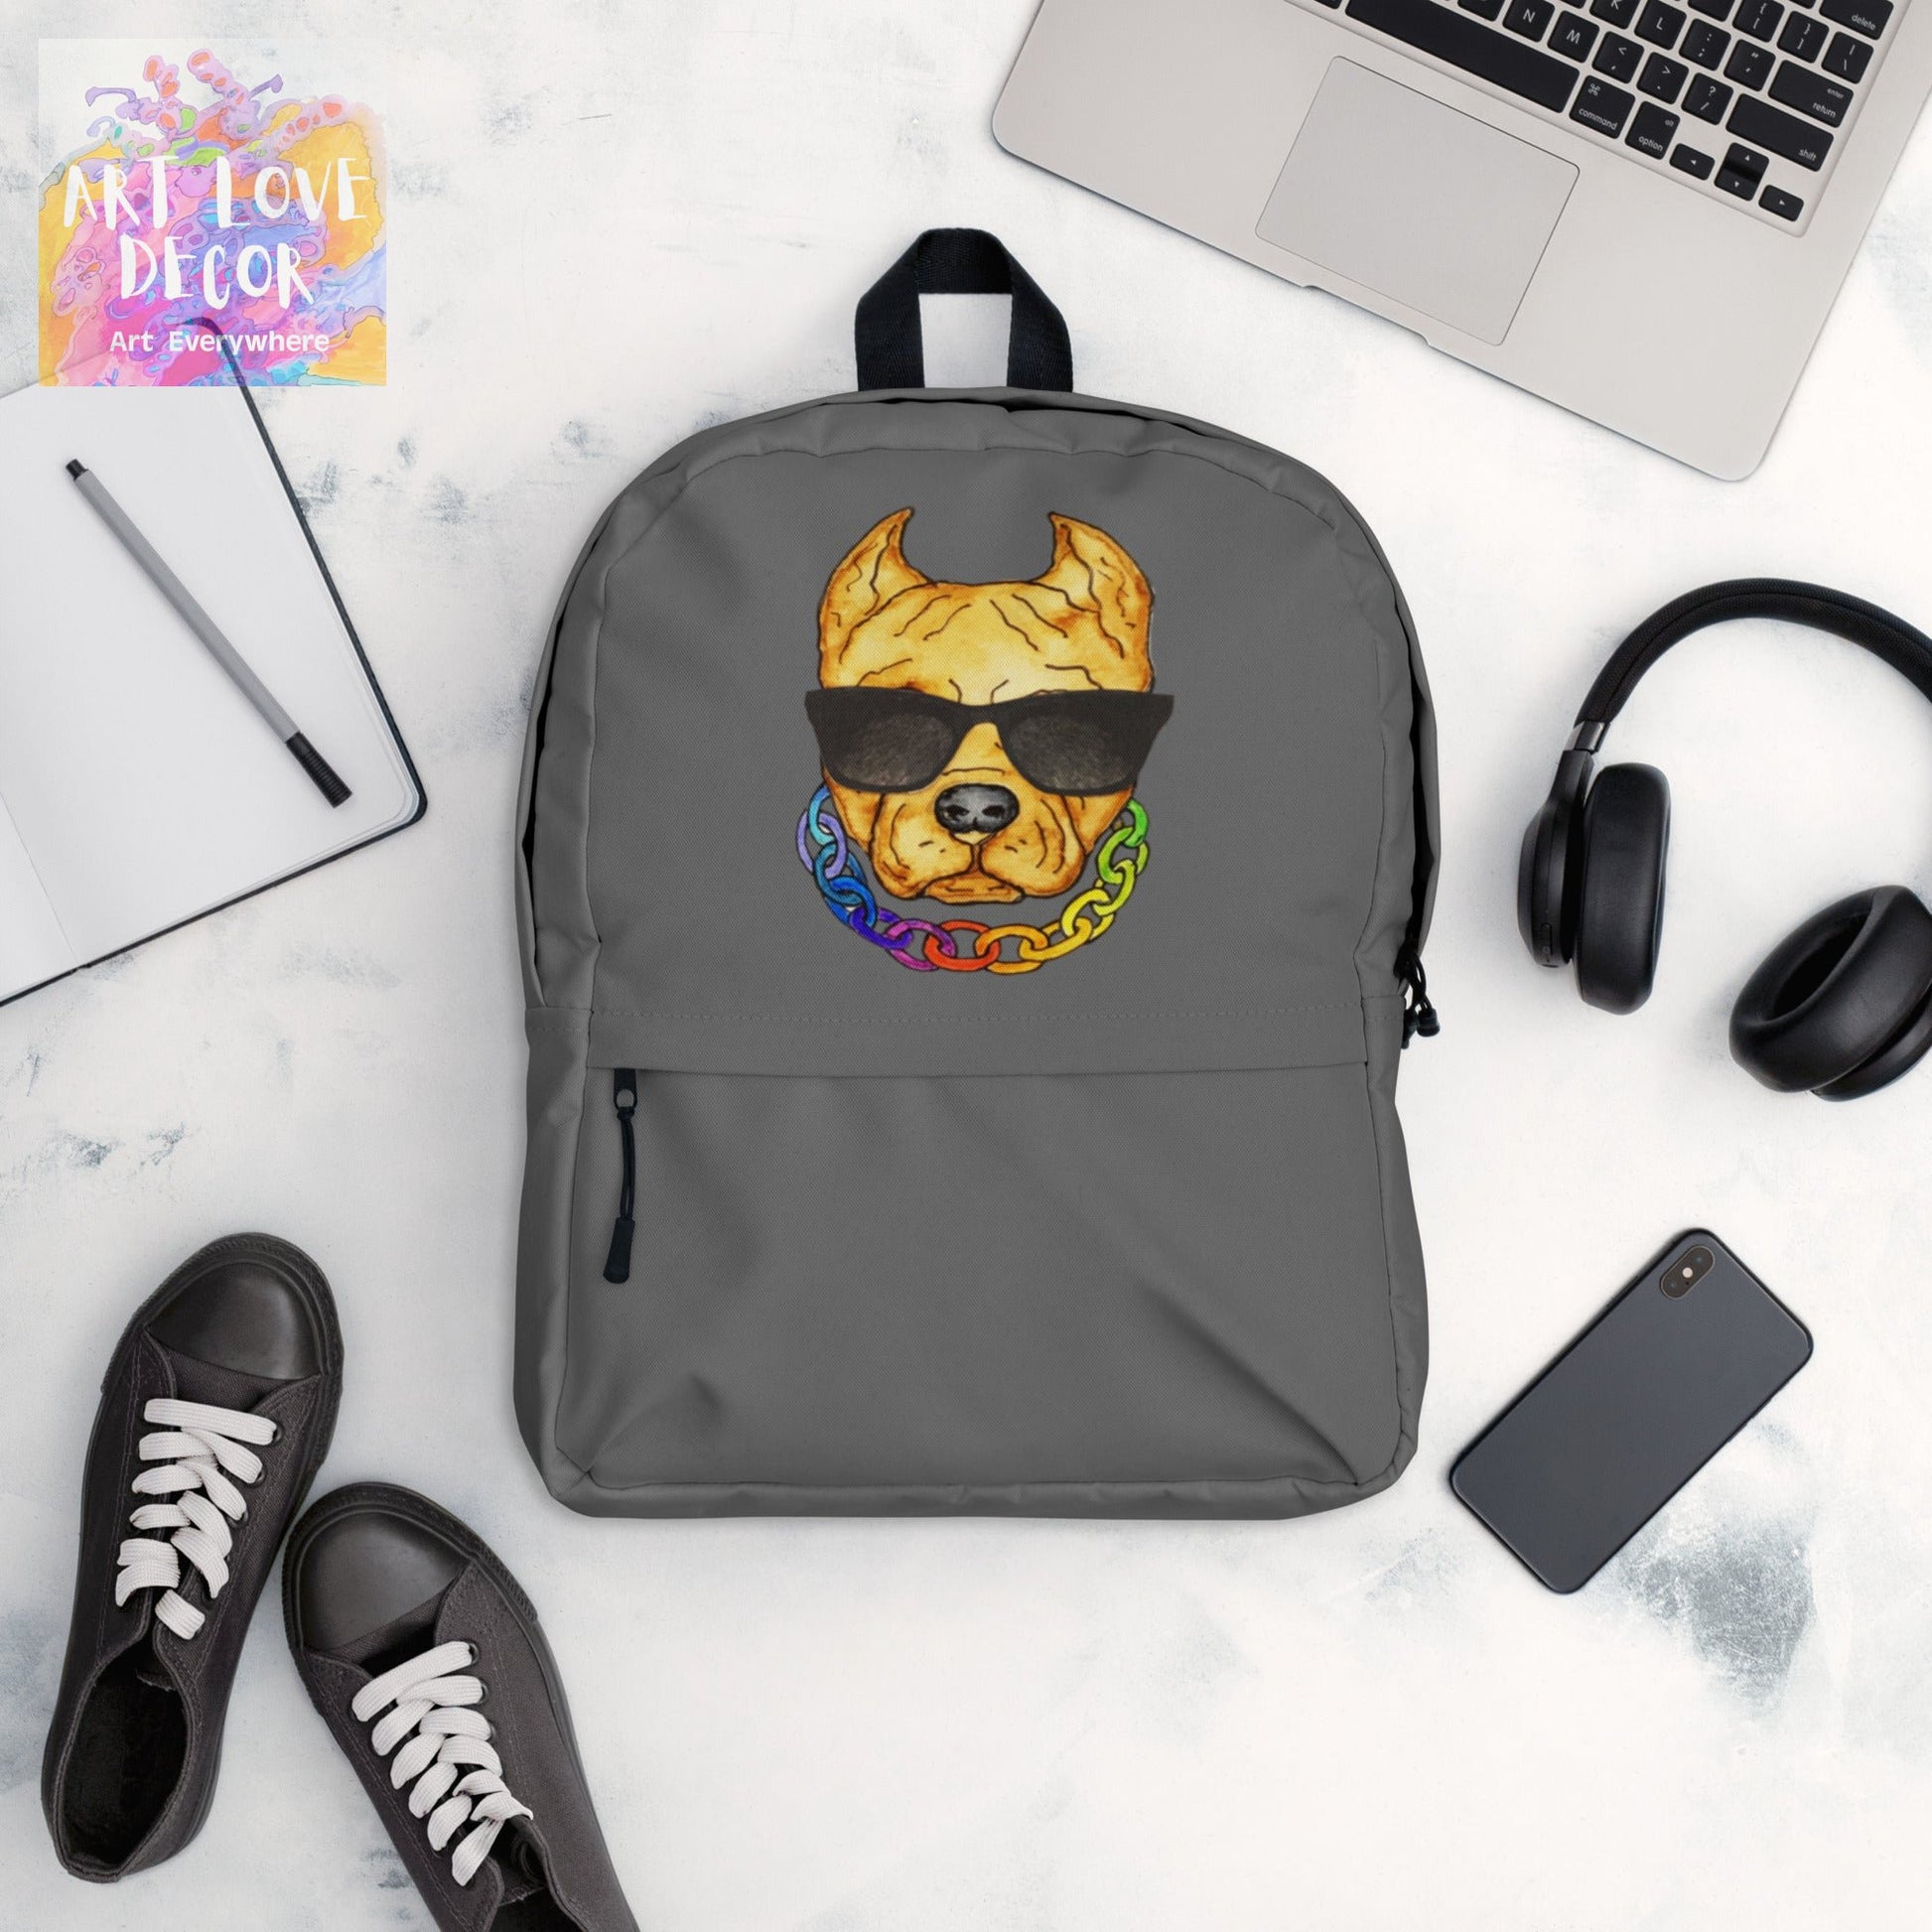 Pit Bull Shades Dog Backpack - Art Love Decor